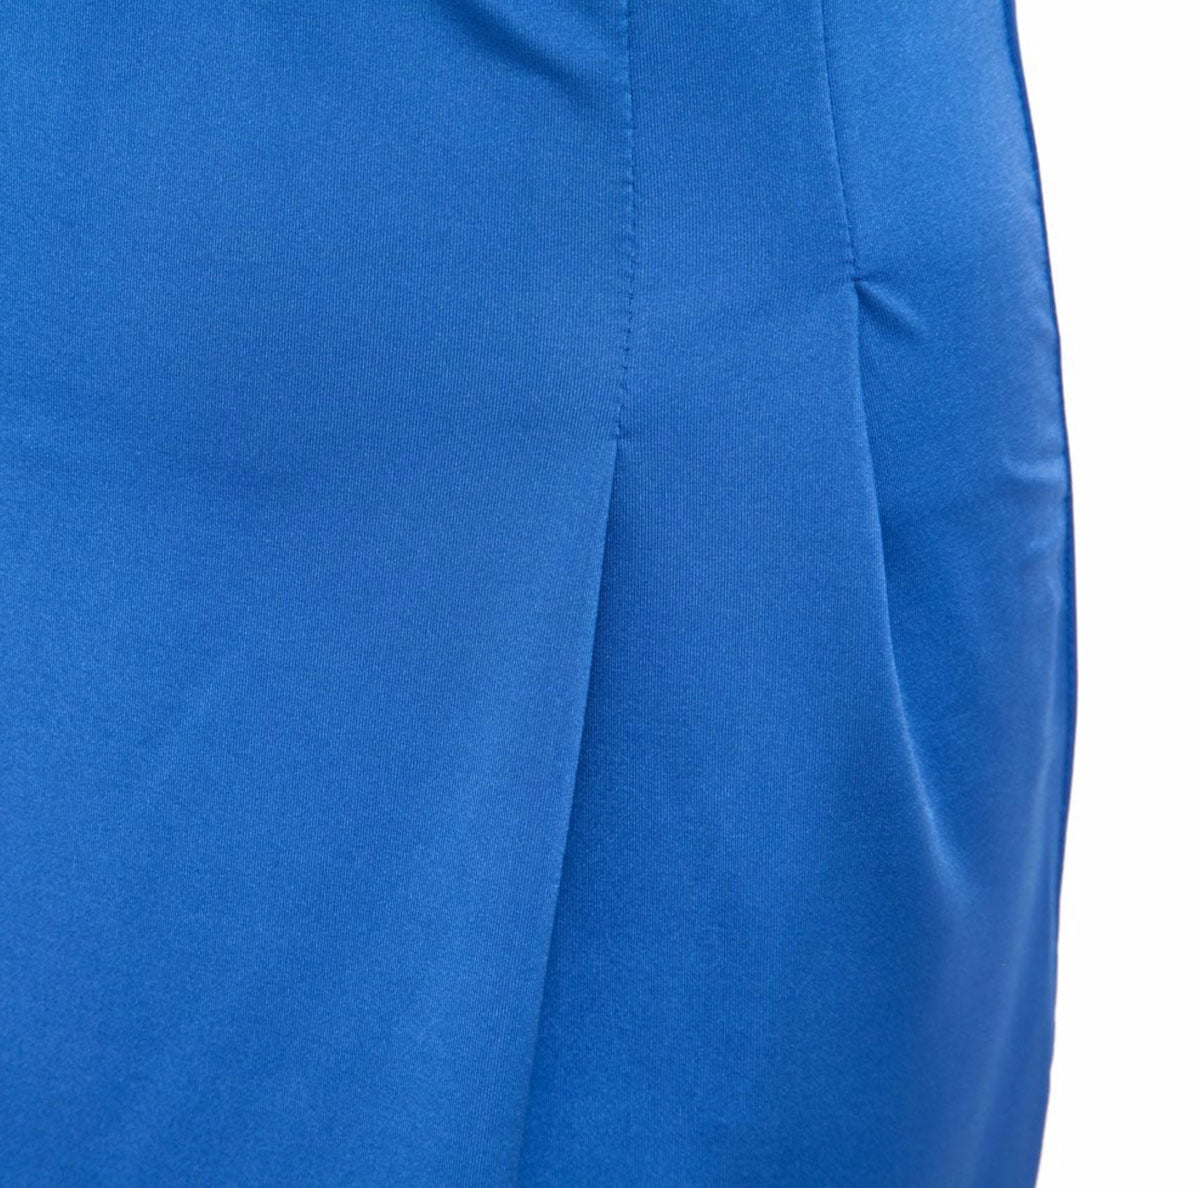 M0188 blue5 Short Sleeve Dresses maureens.com boutique